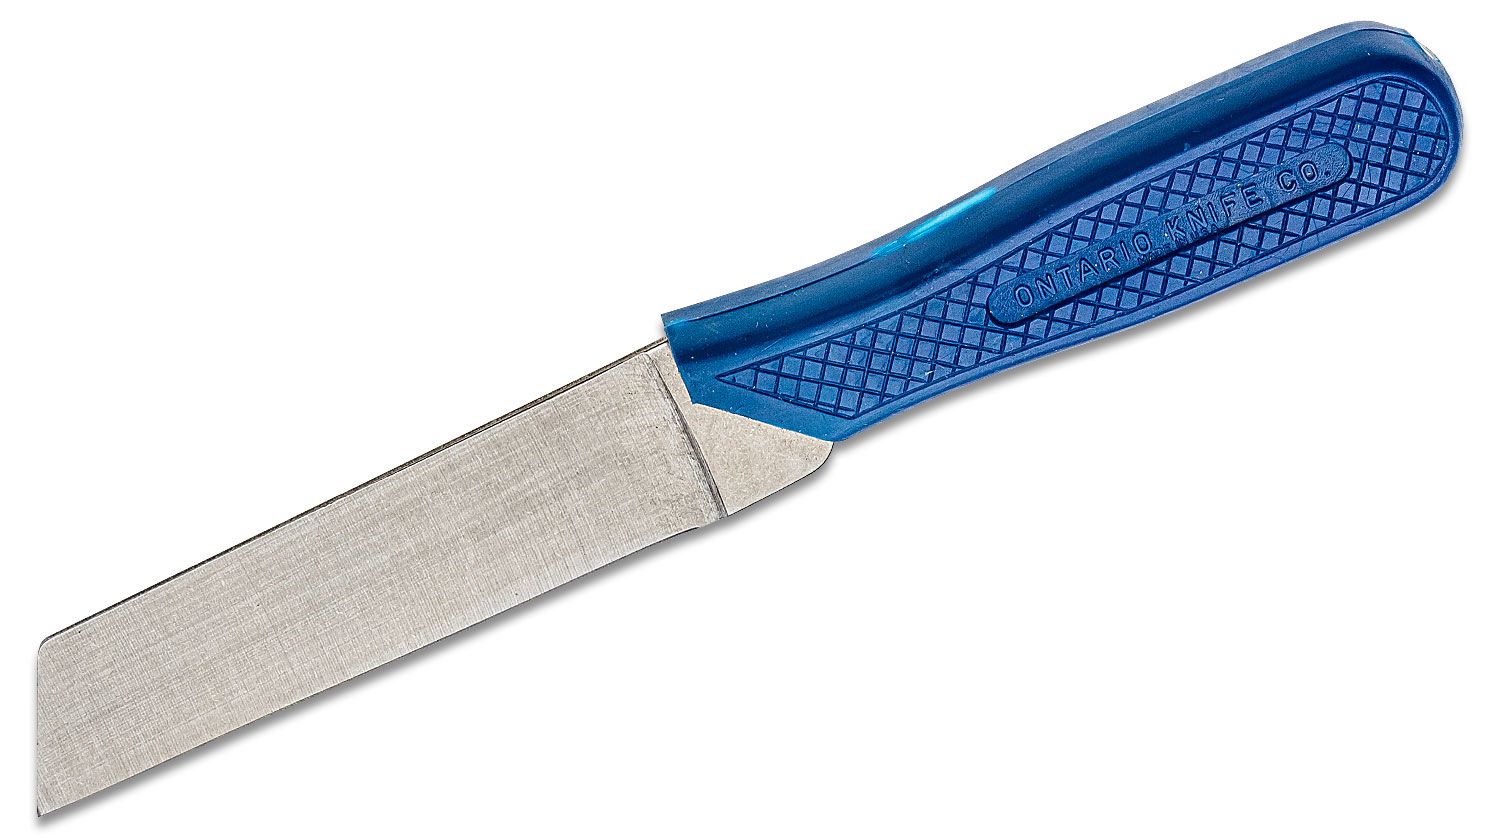 Ontario Vegetable Field Knife 3.75 inch Stainless Steel Blade, Blue Plastic  Handle